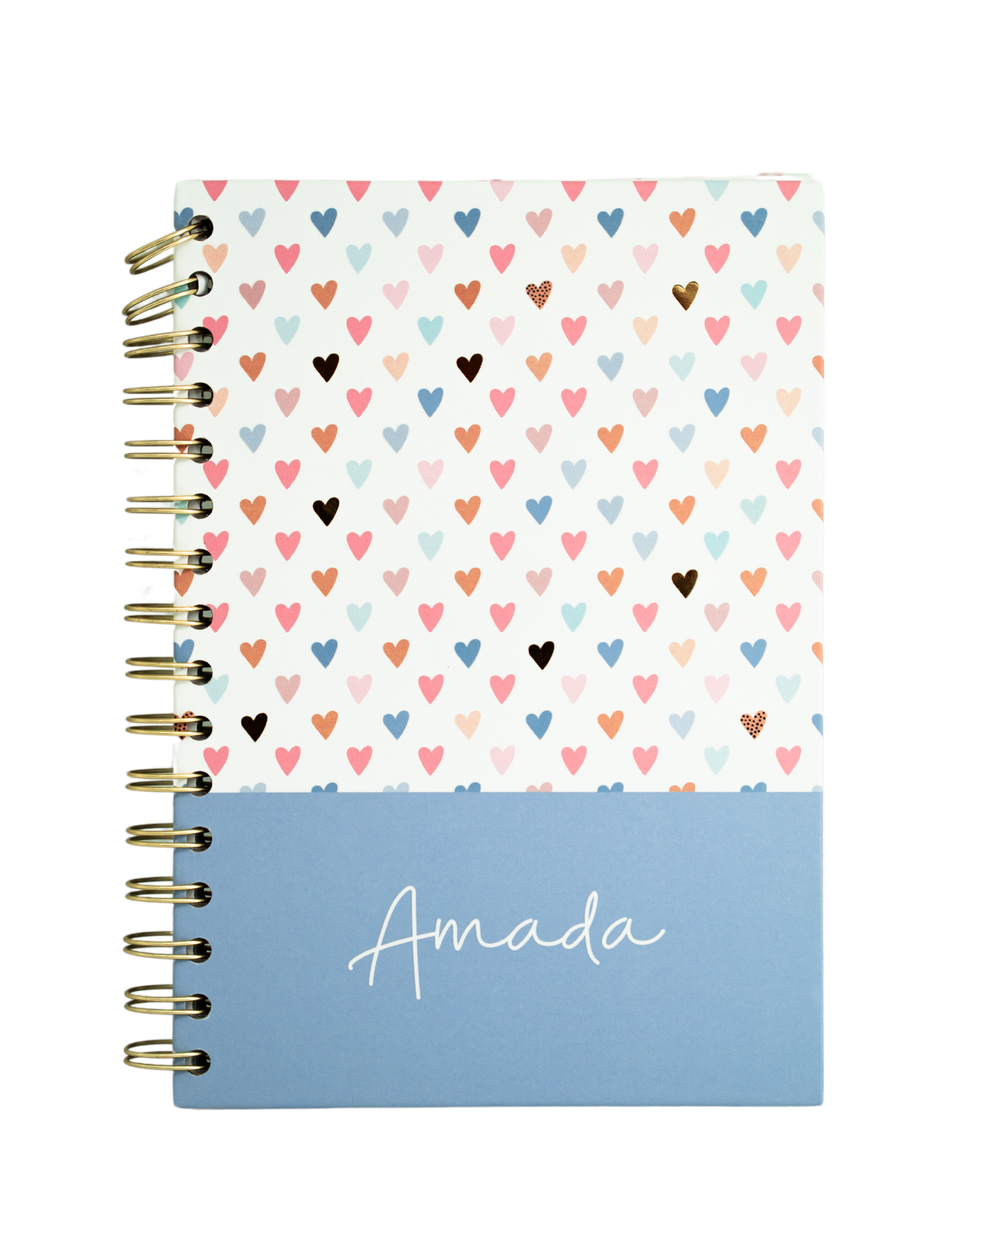 Amada - Journal Corazones